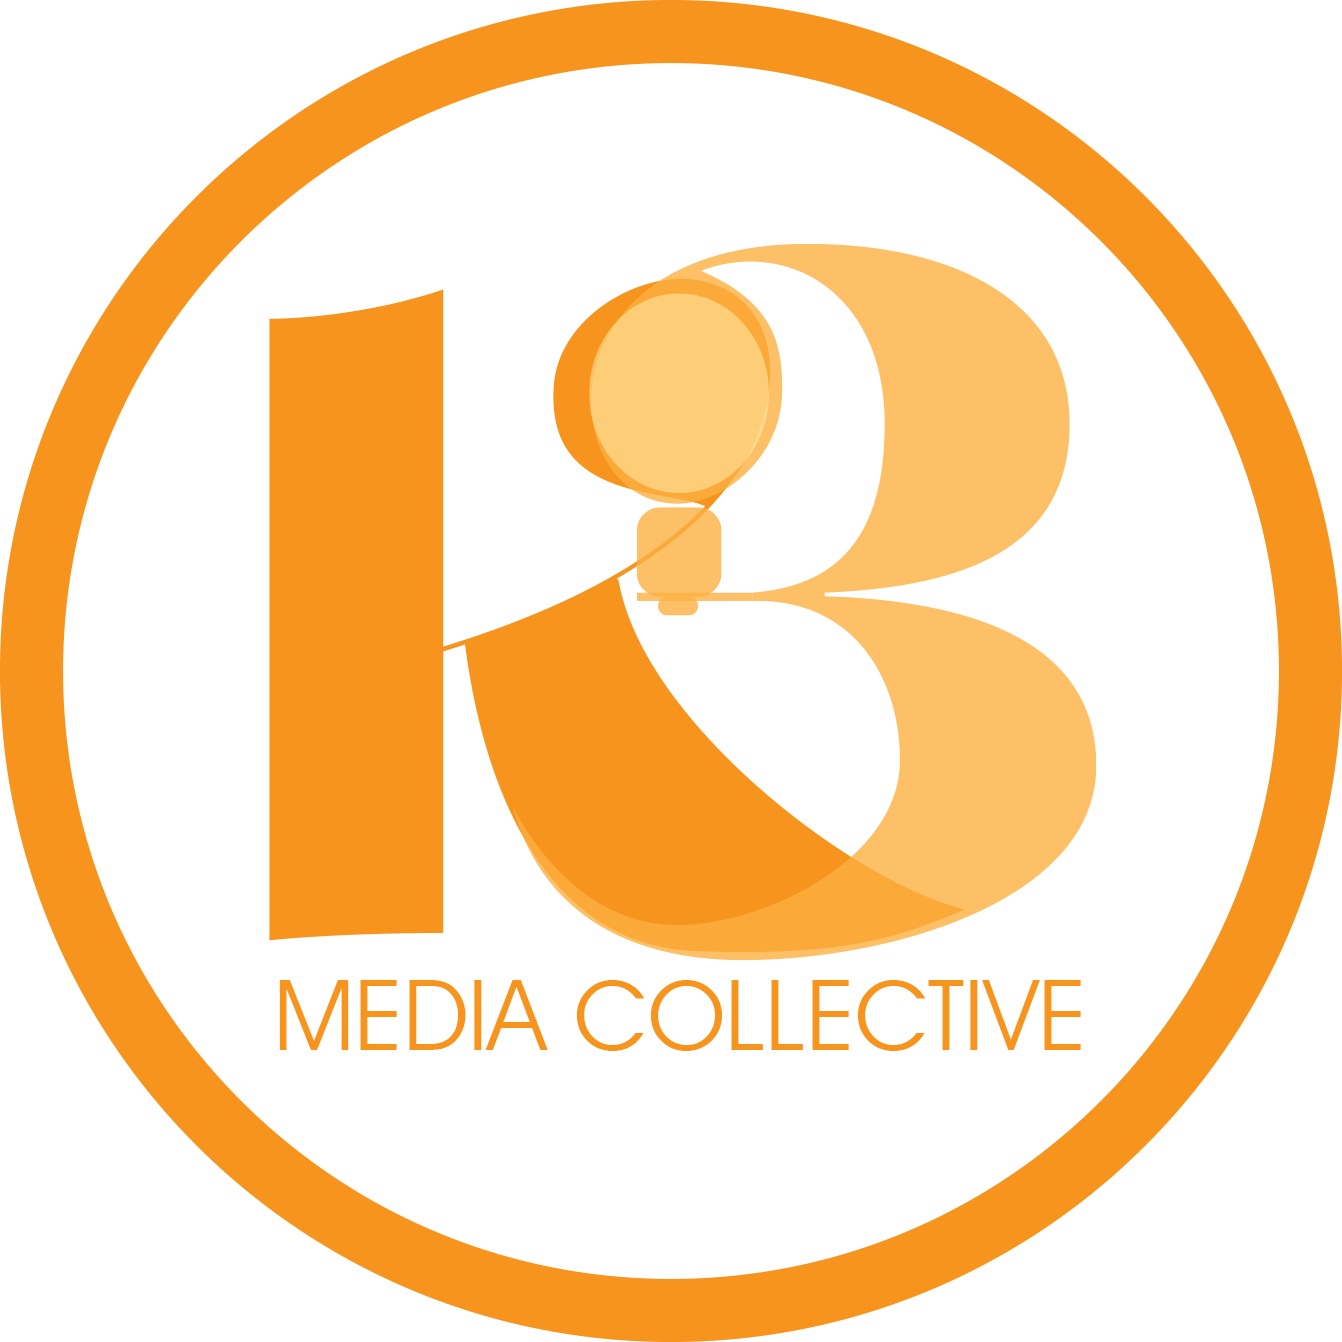 K3 Media Collective